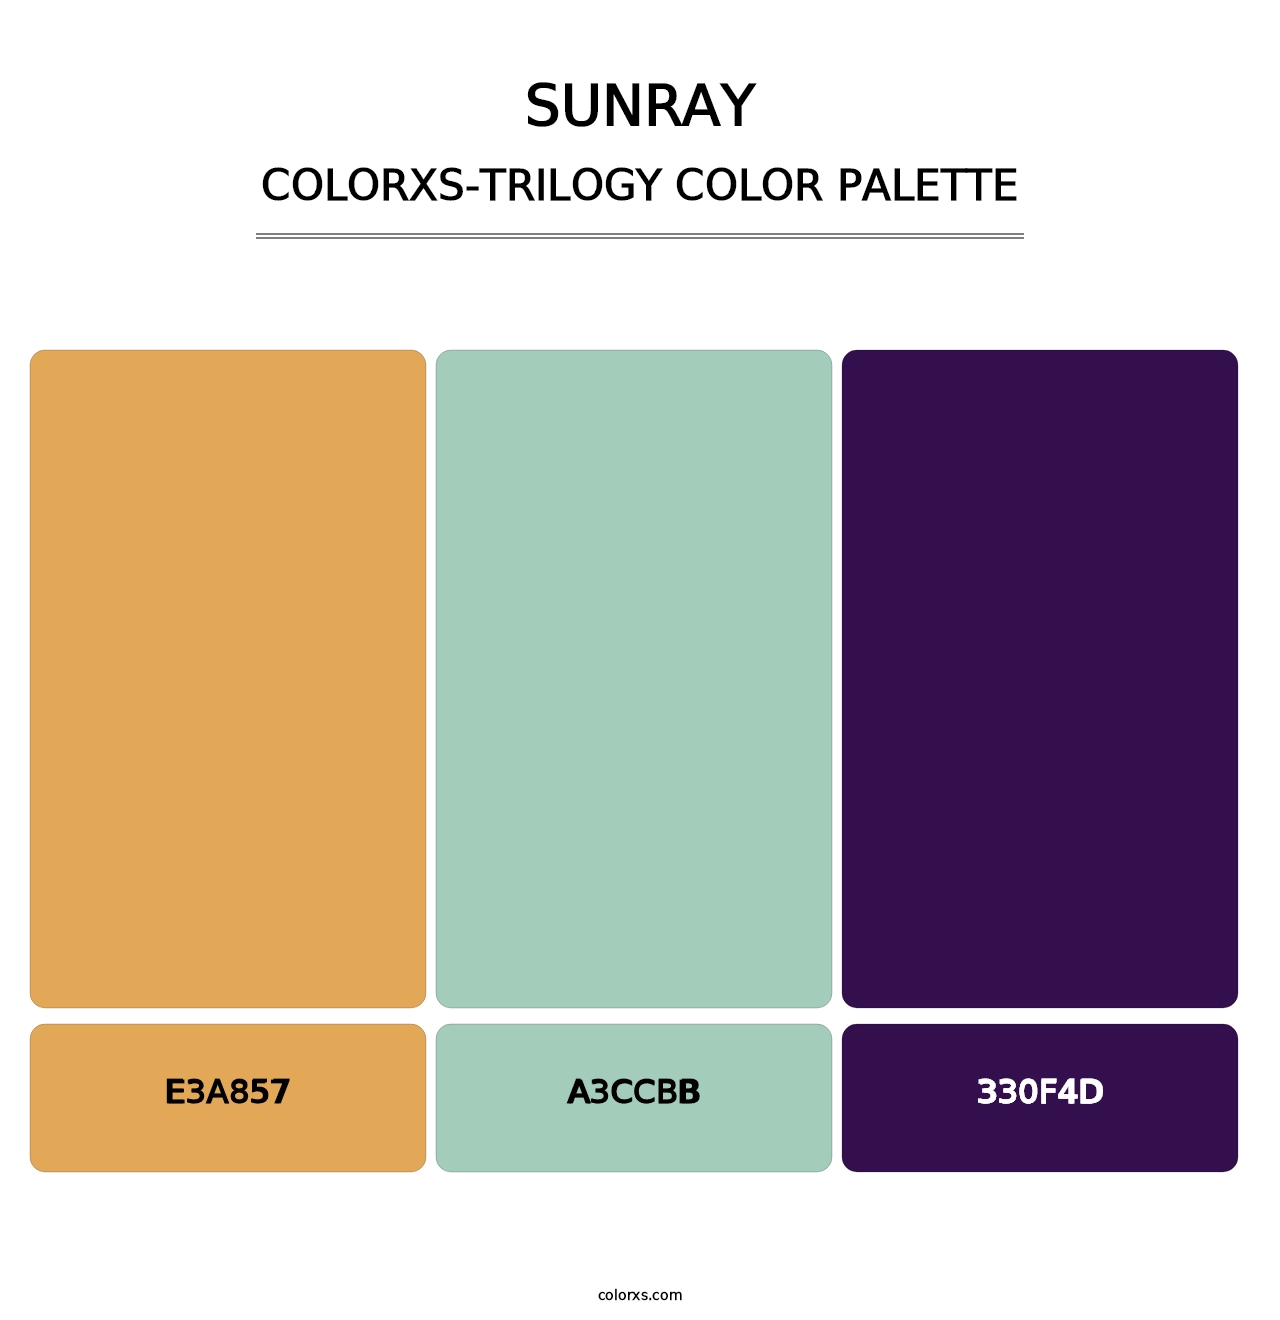 Sunray - Colorxs Trilogy Palette